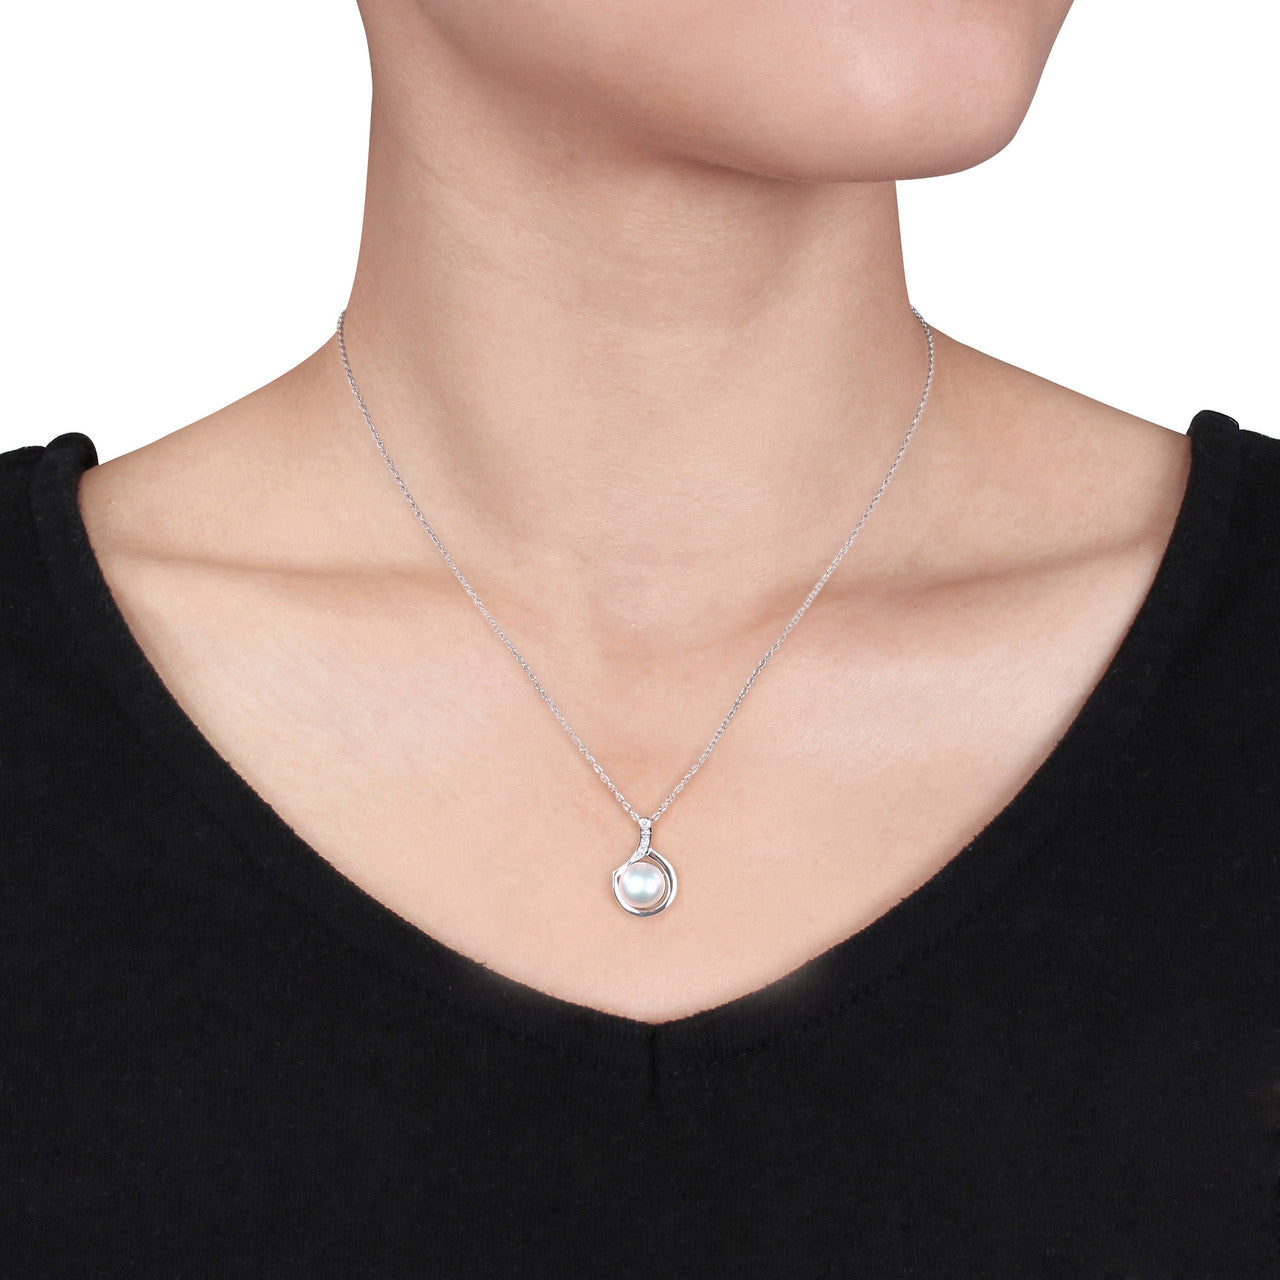 Ice Jewellery Freshwater Pearl & Diamond Pendant with Silver Chain - 7500499443 | Ice Jewellery Australia